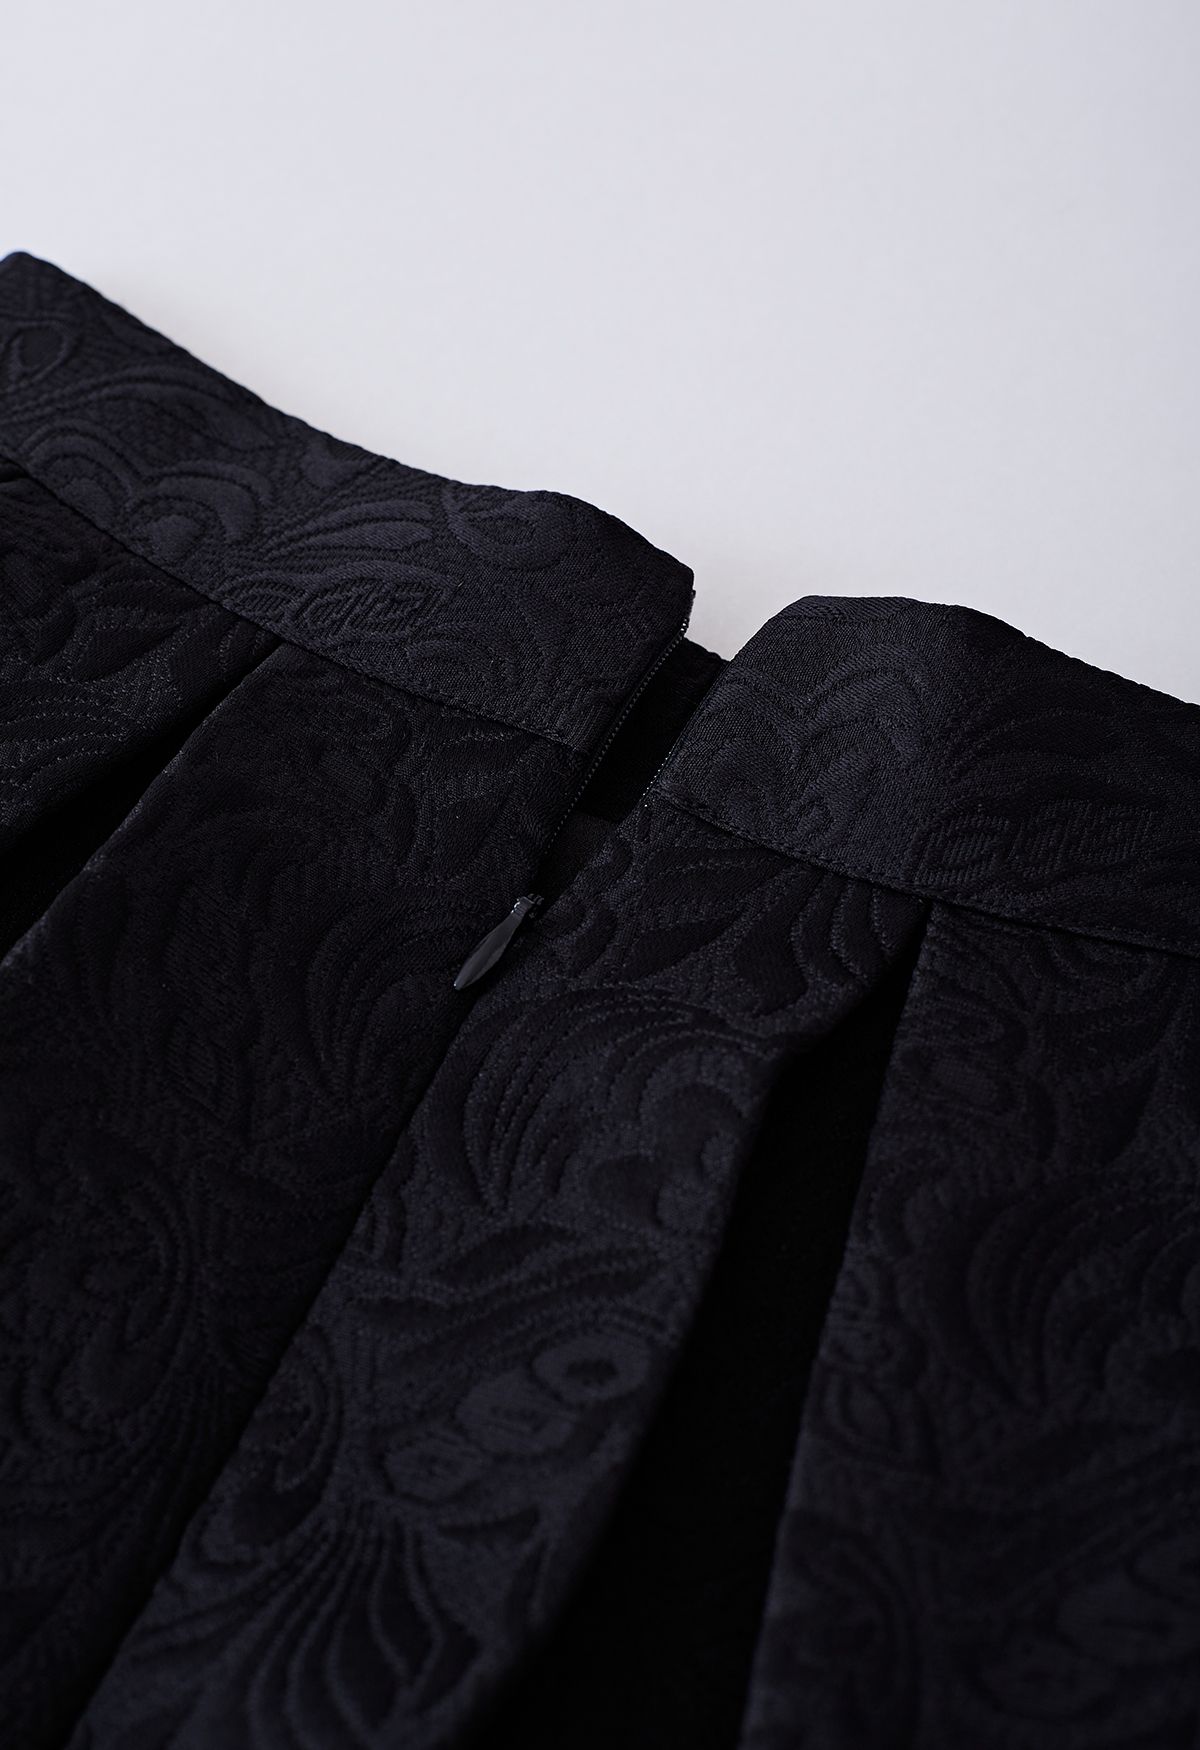 Noble Embossed Floral Jacquard Midi Skirt in Black